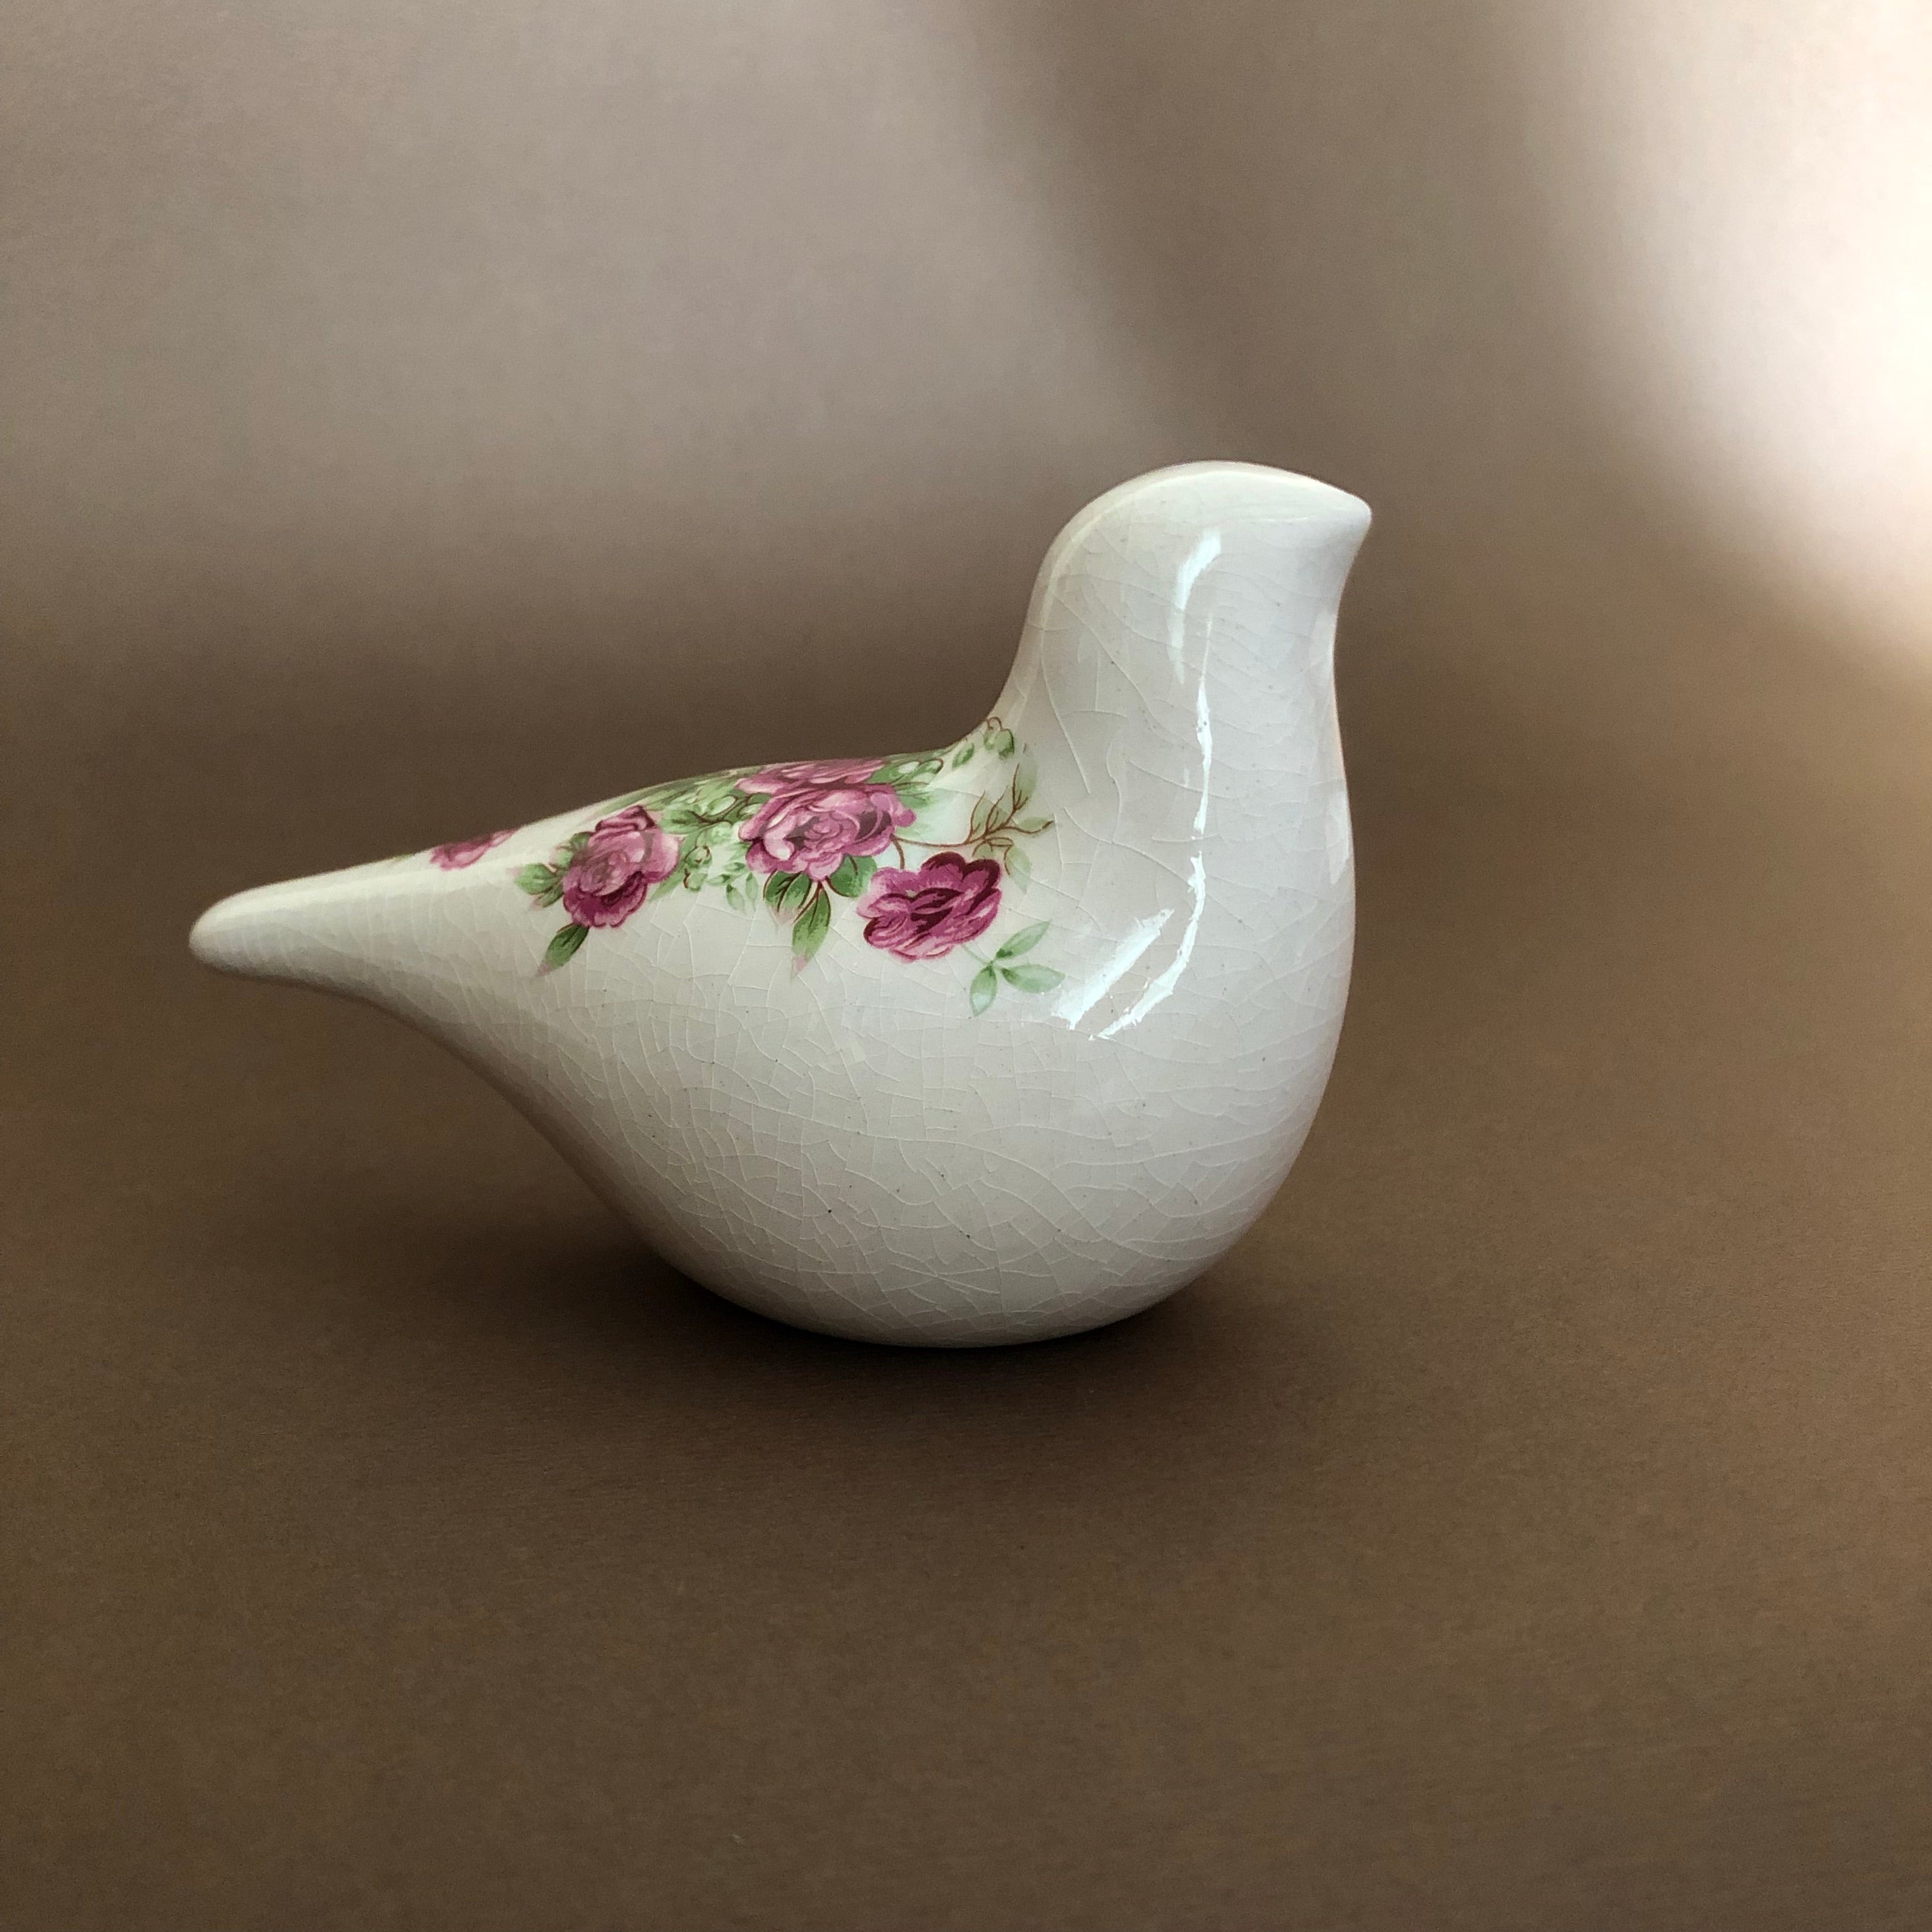 Handmade Decorative Ceramic Bird